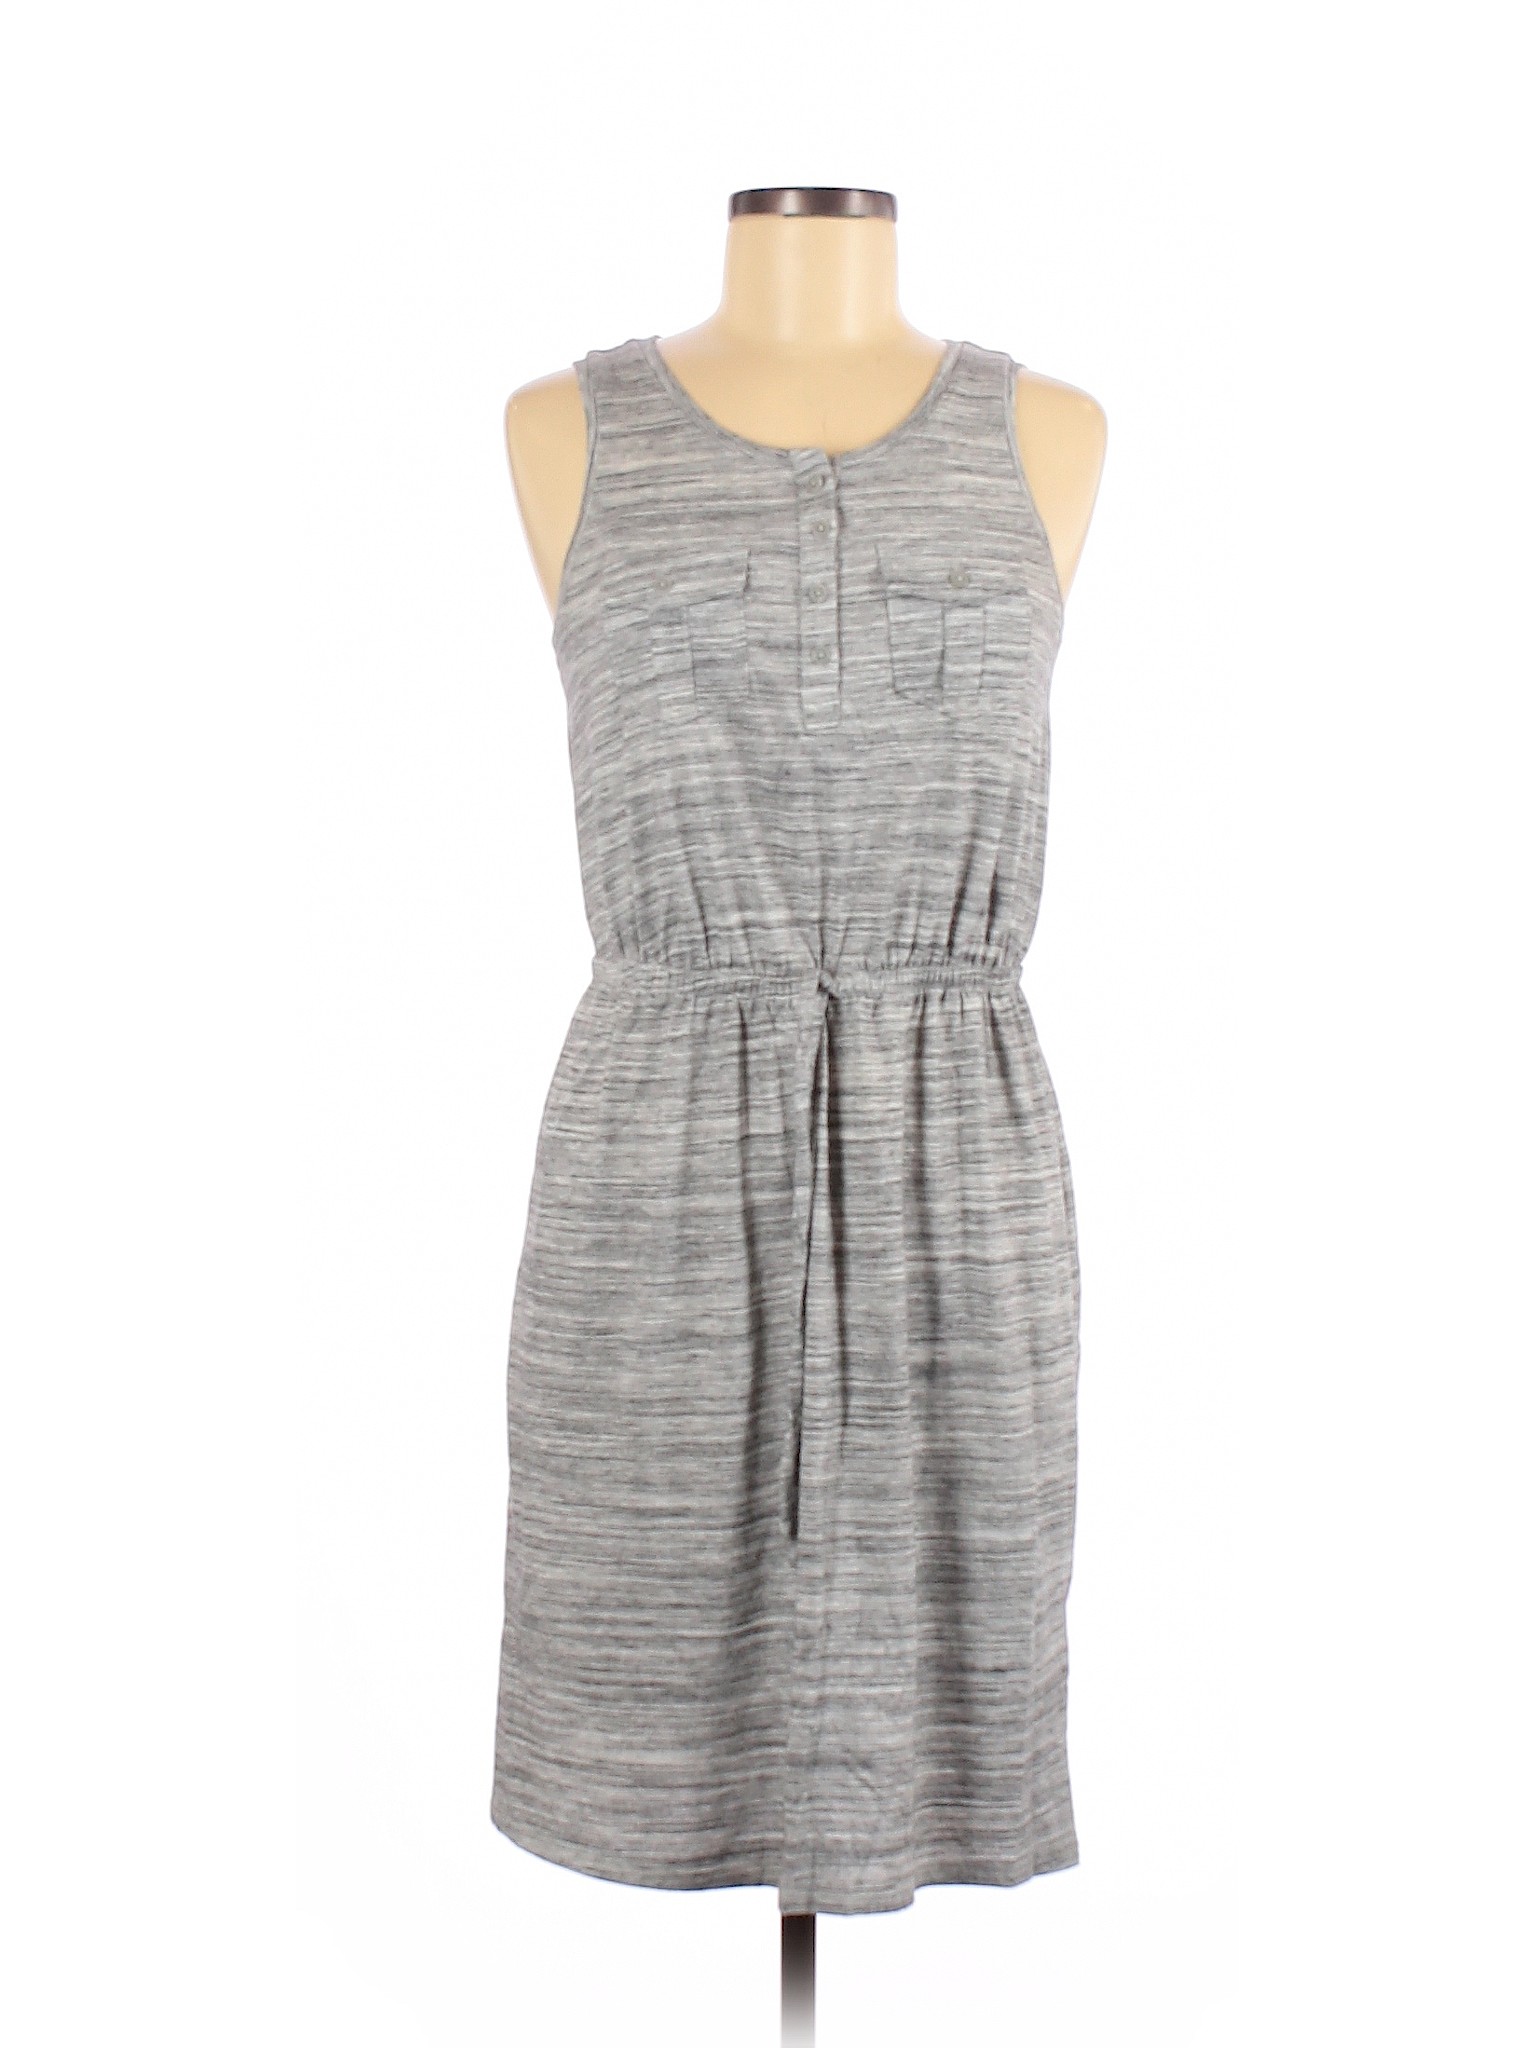 SONOMA life + style Women Gray Casual Dress S | eBay